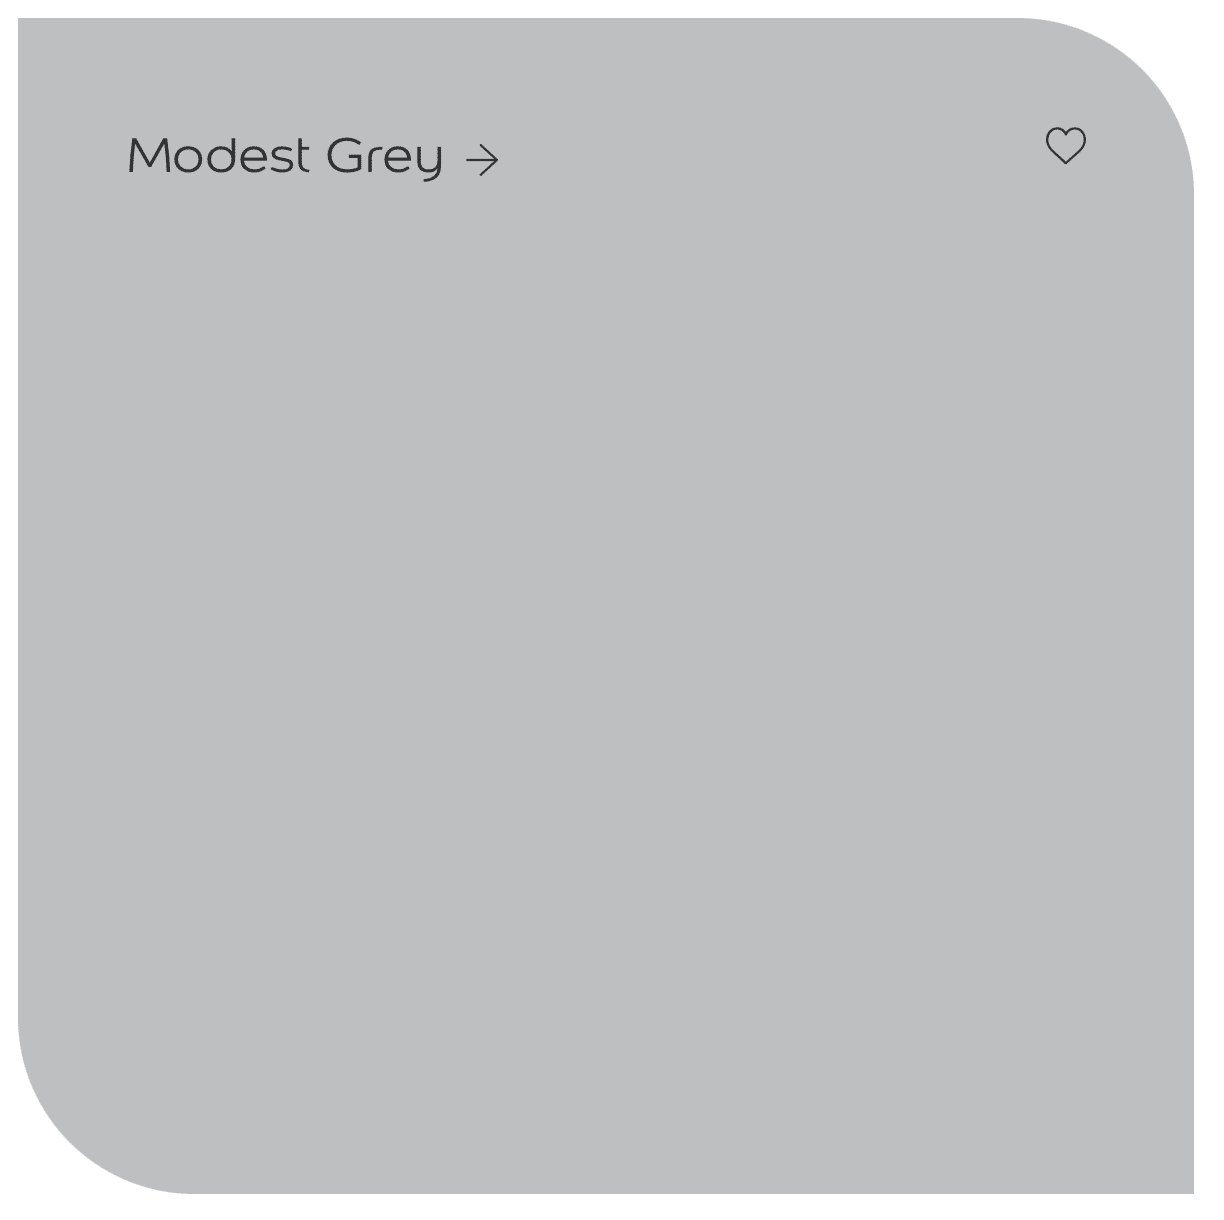 Modest Grey